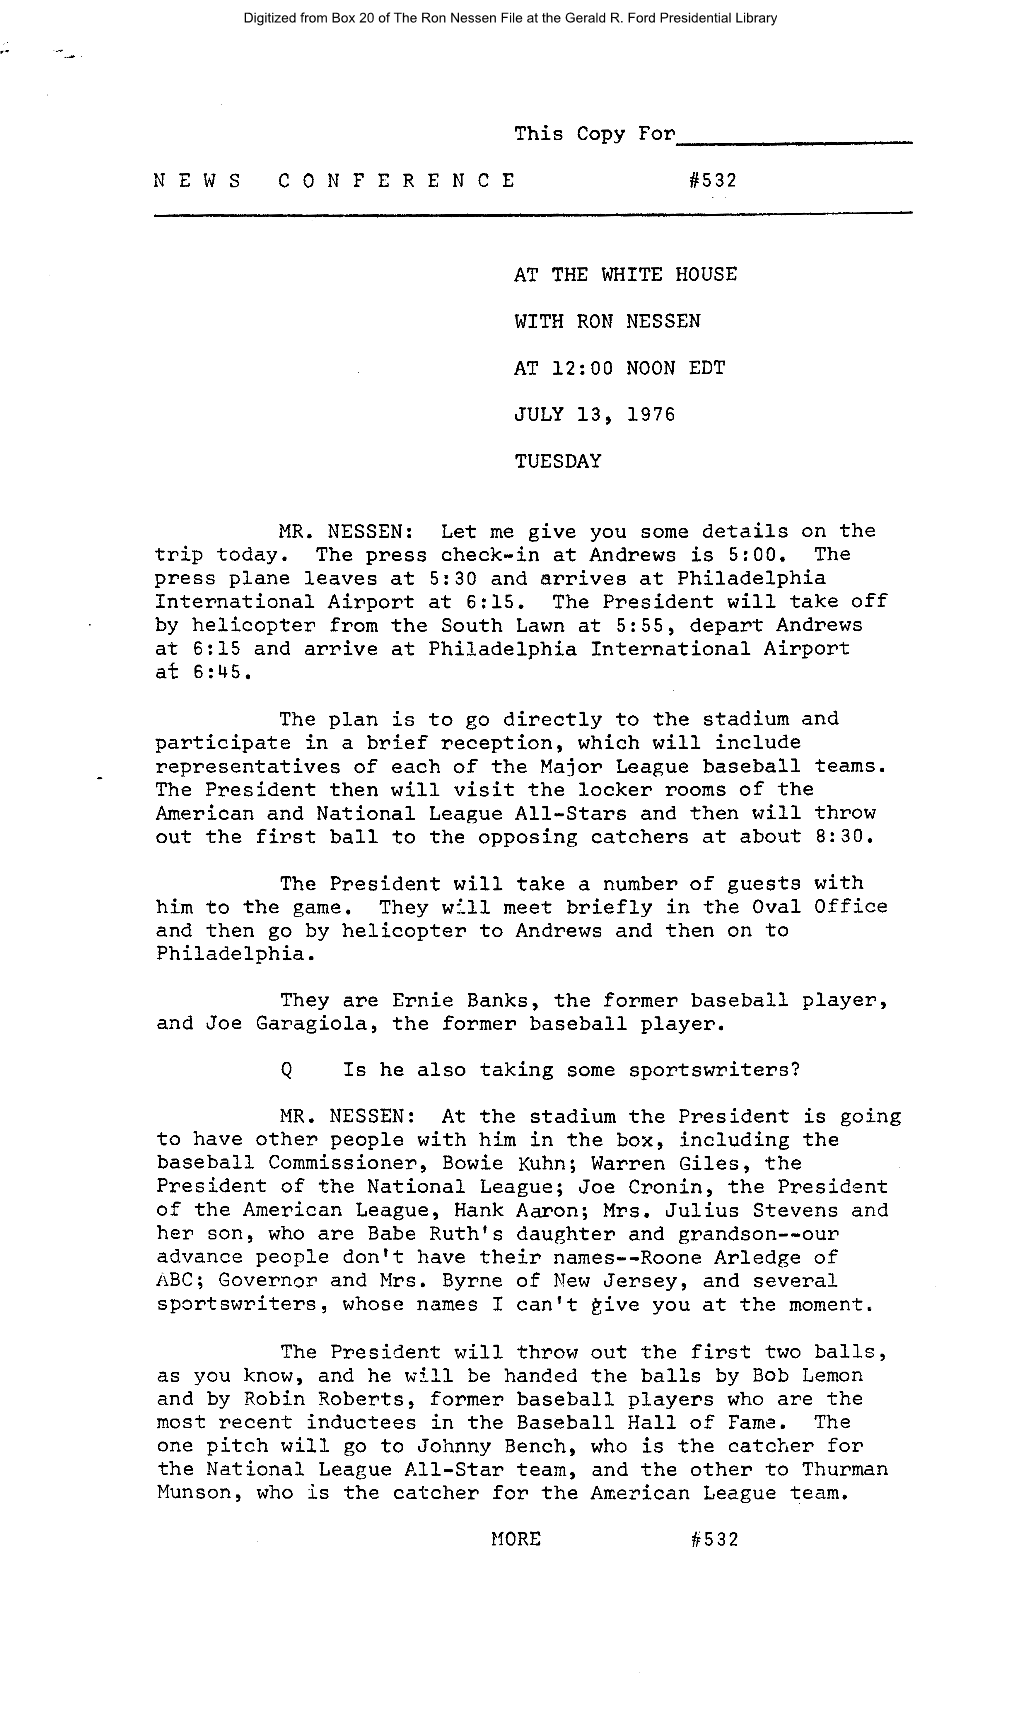 Press Secretary Briefings, 7/13/76